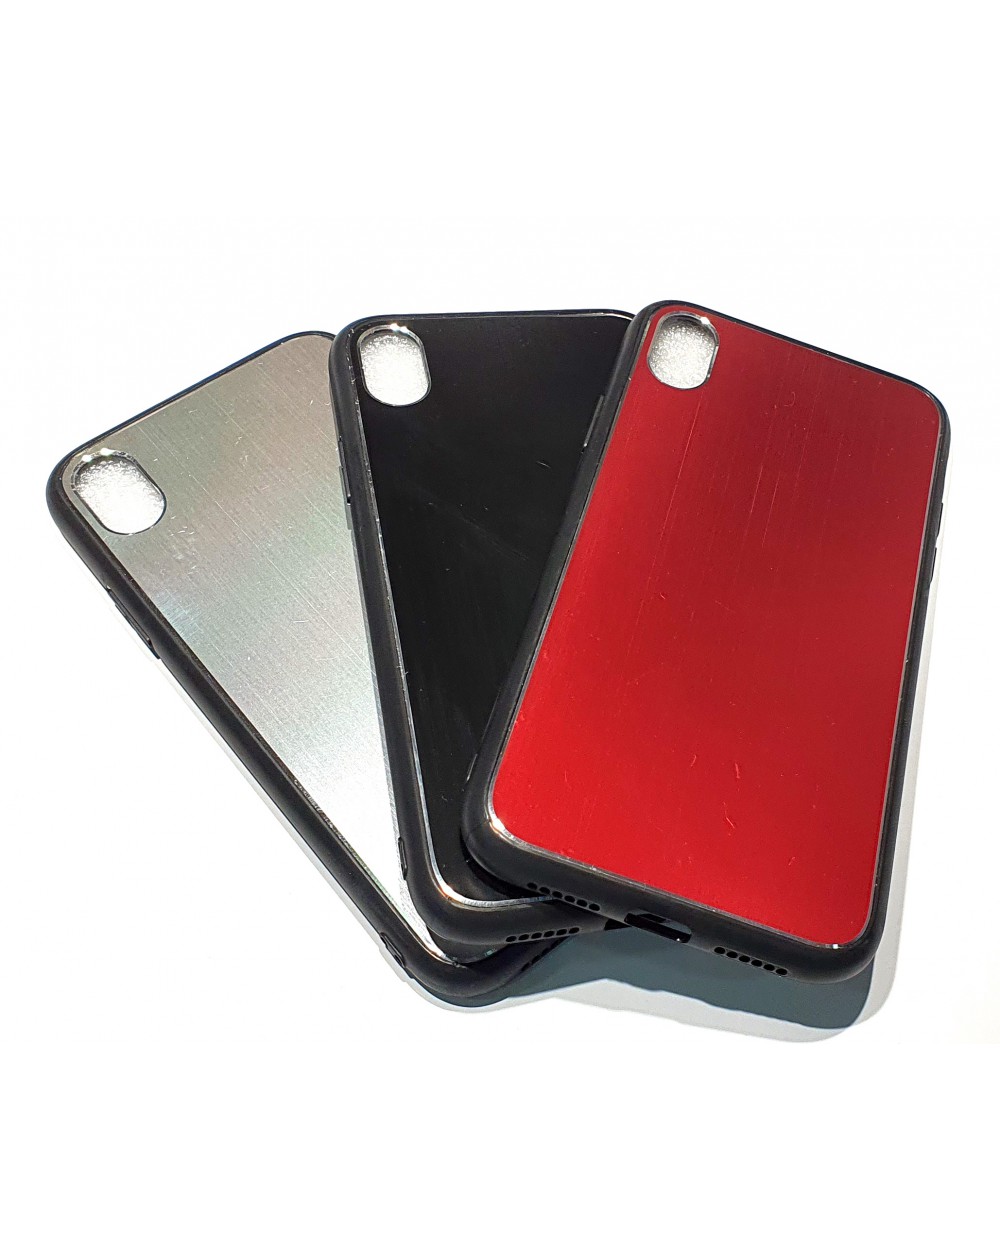 Funda Apple Leather Case Rojo para iPhone 5/5S/SE - Funda para teléfono  móvil